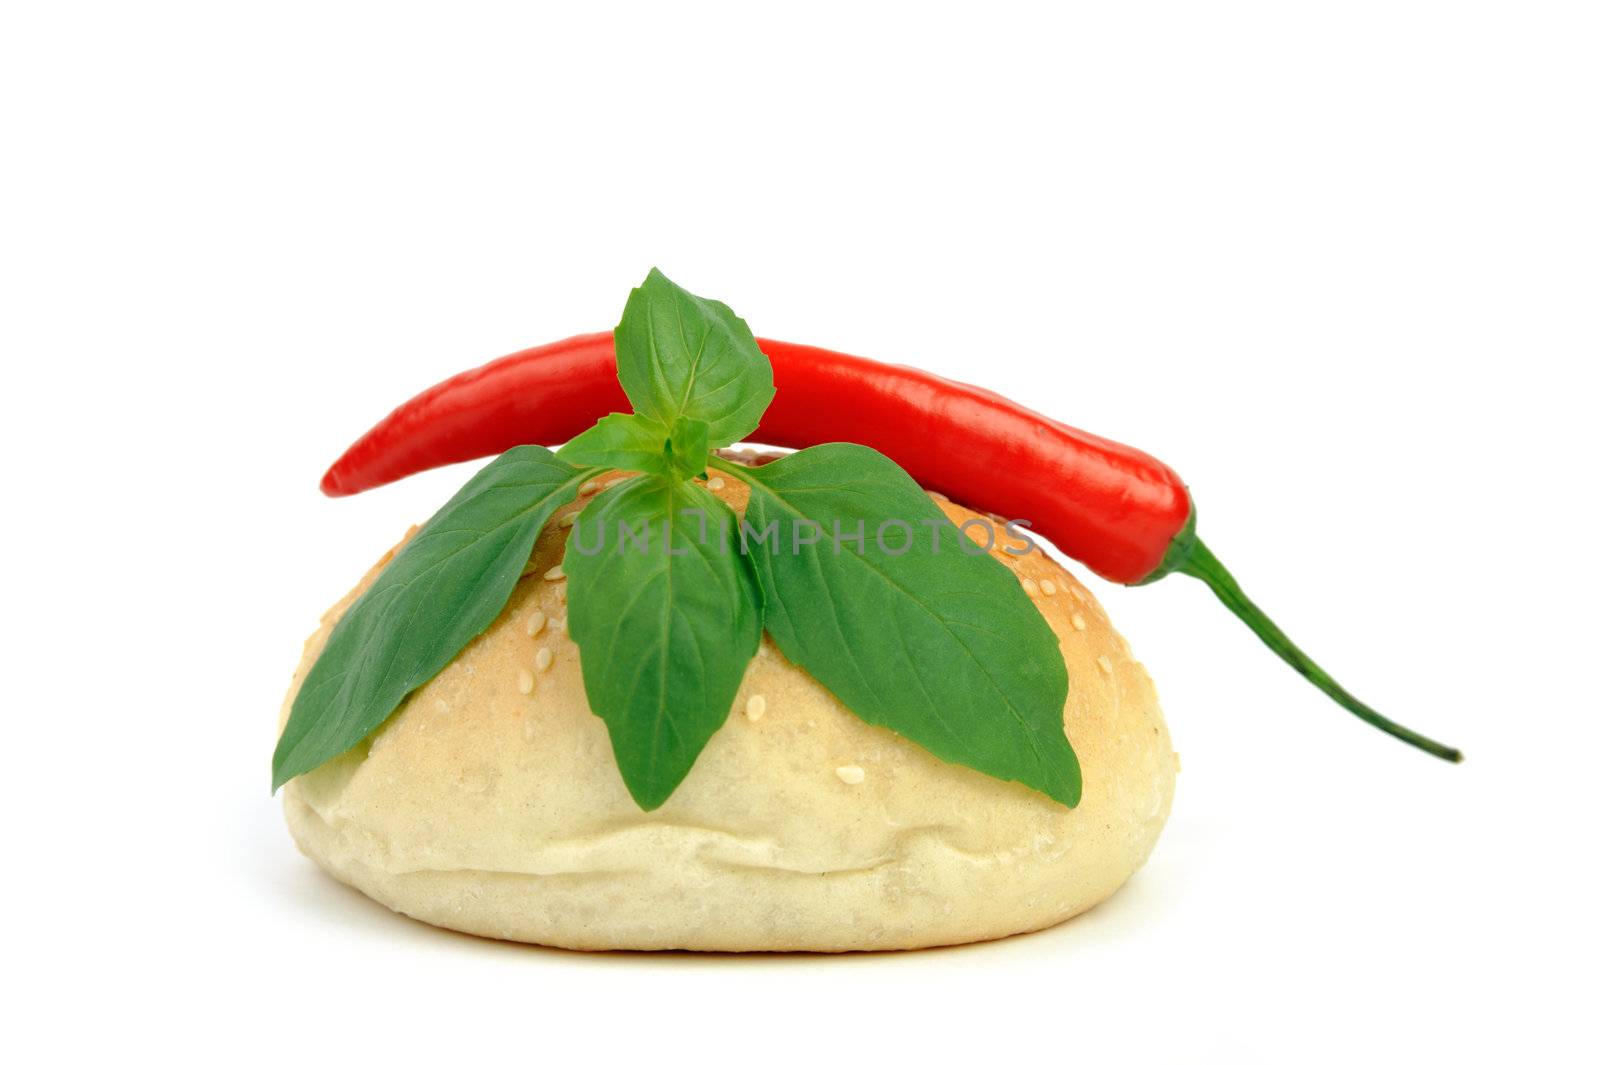 An image of a fresh bun, pepper and basil